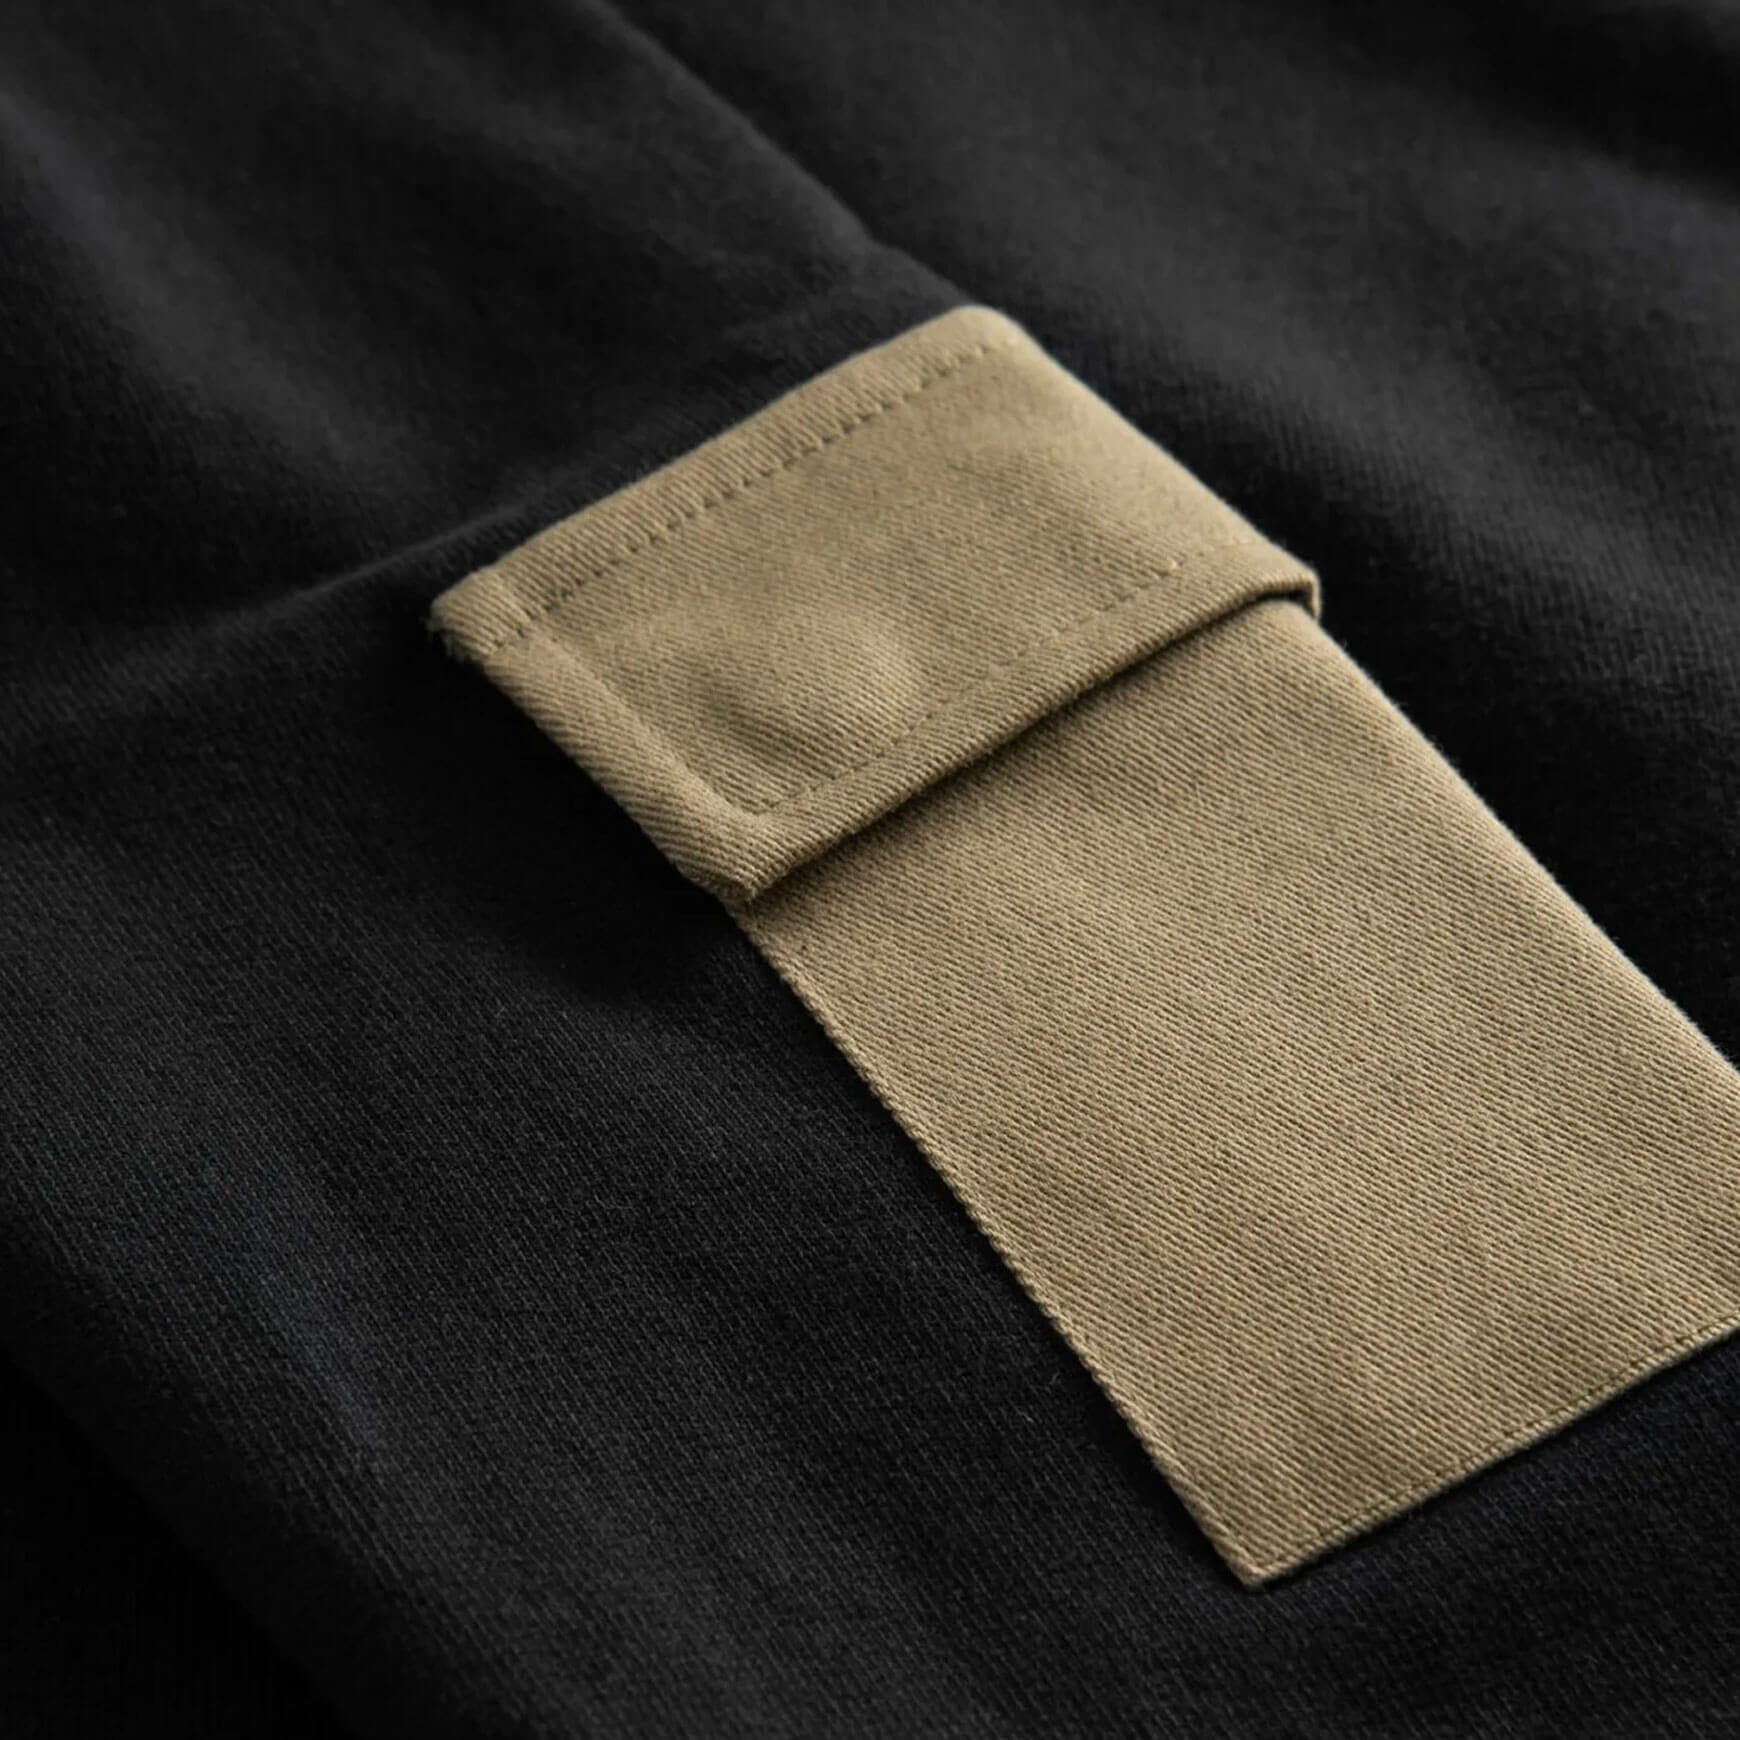 Tactical Hybrid Sweatshirt Black/Olive